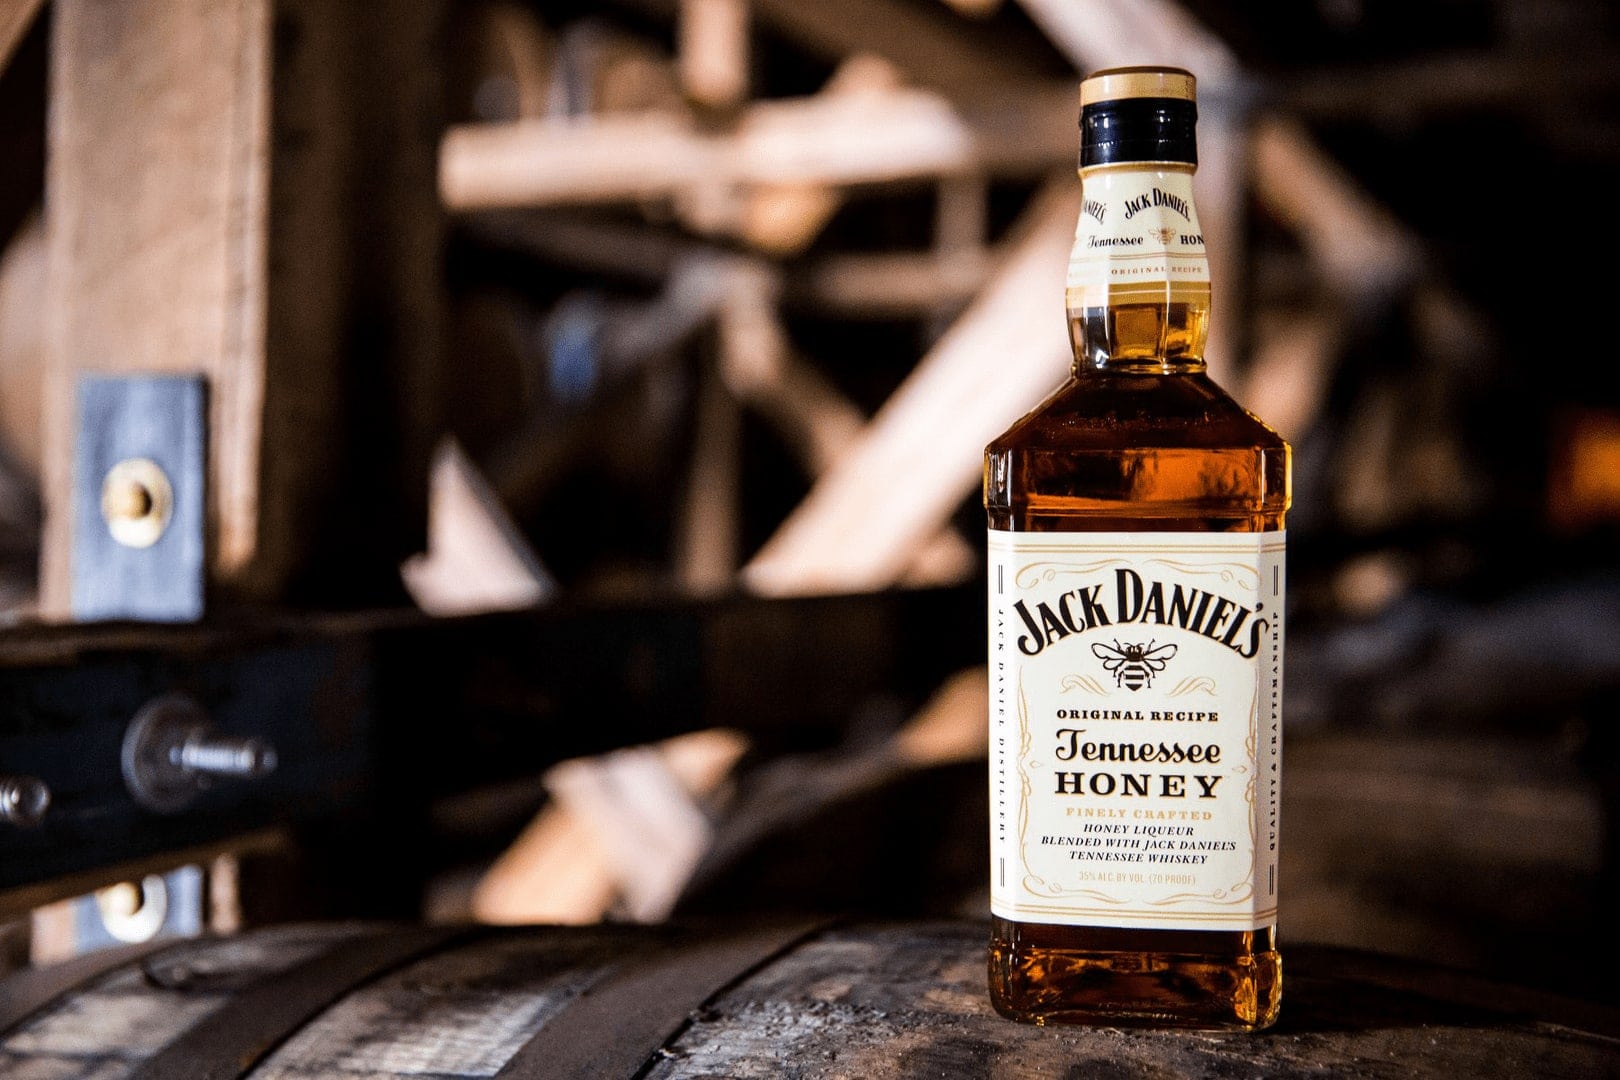 A bottle of Jack Daniel's Honey